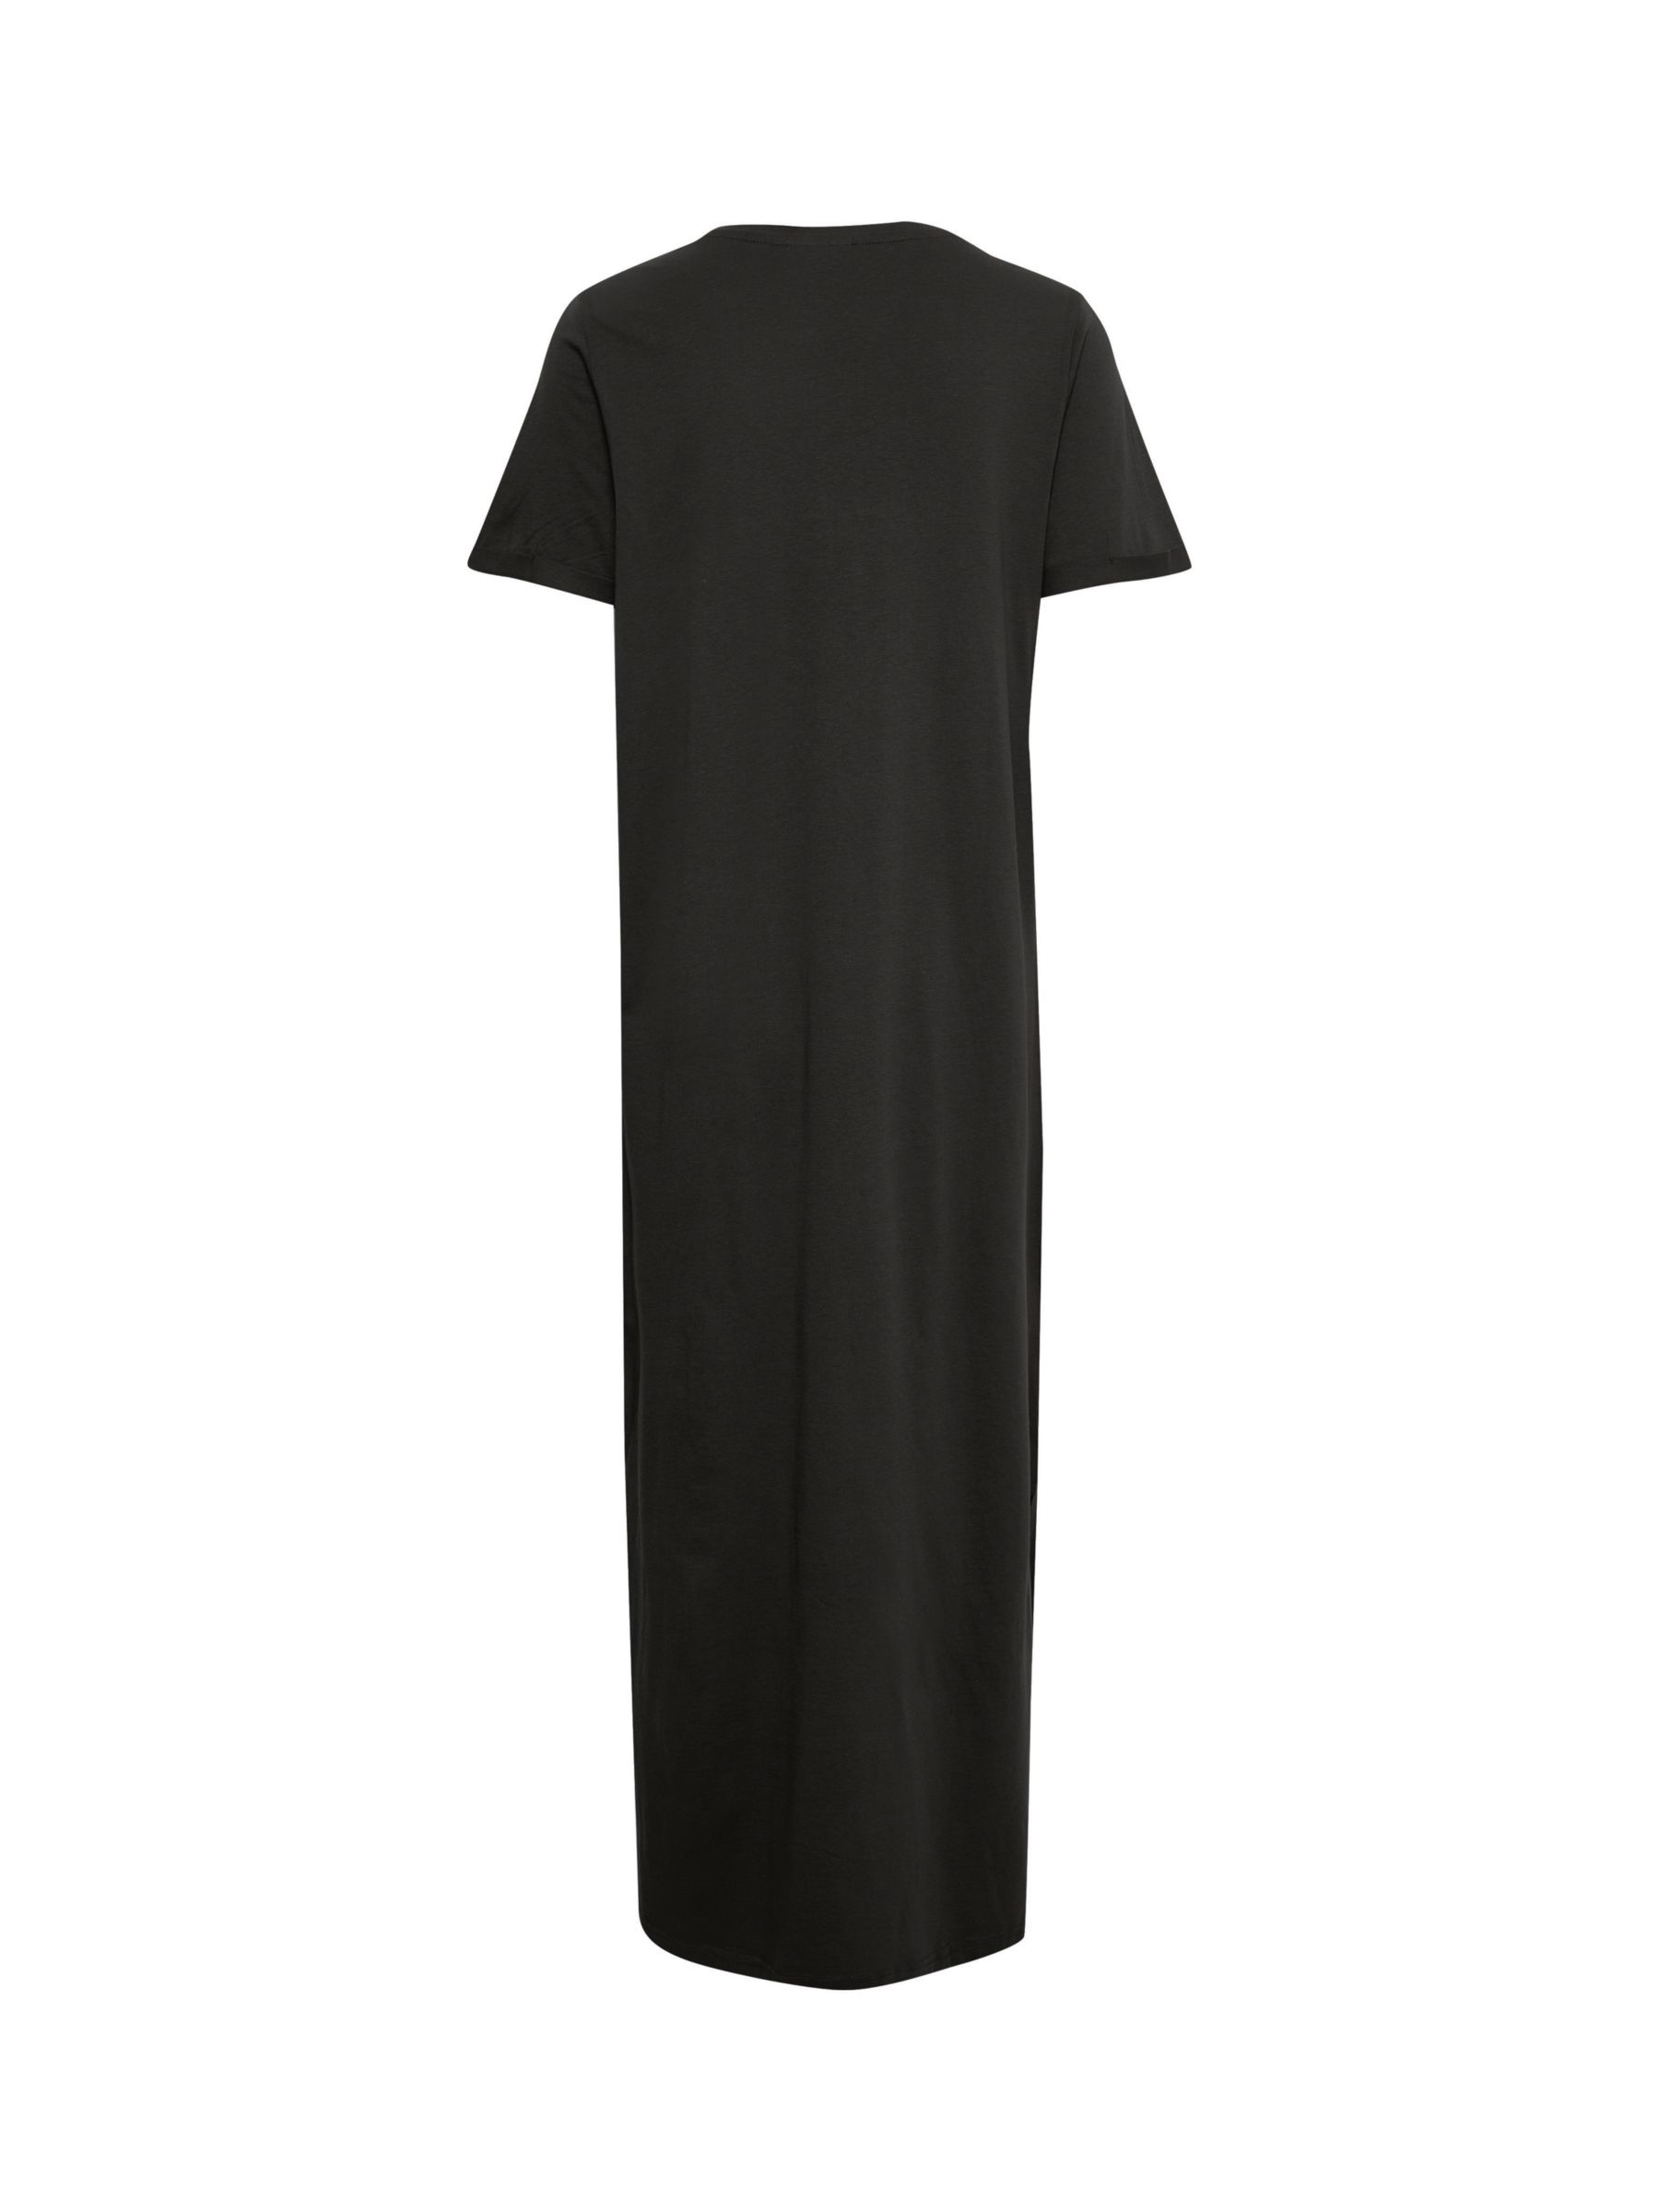 KAFFE Celina T-Shirt Dress, Black Deep at John Lewis & Partners